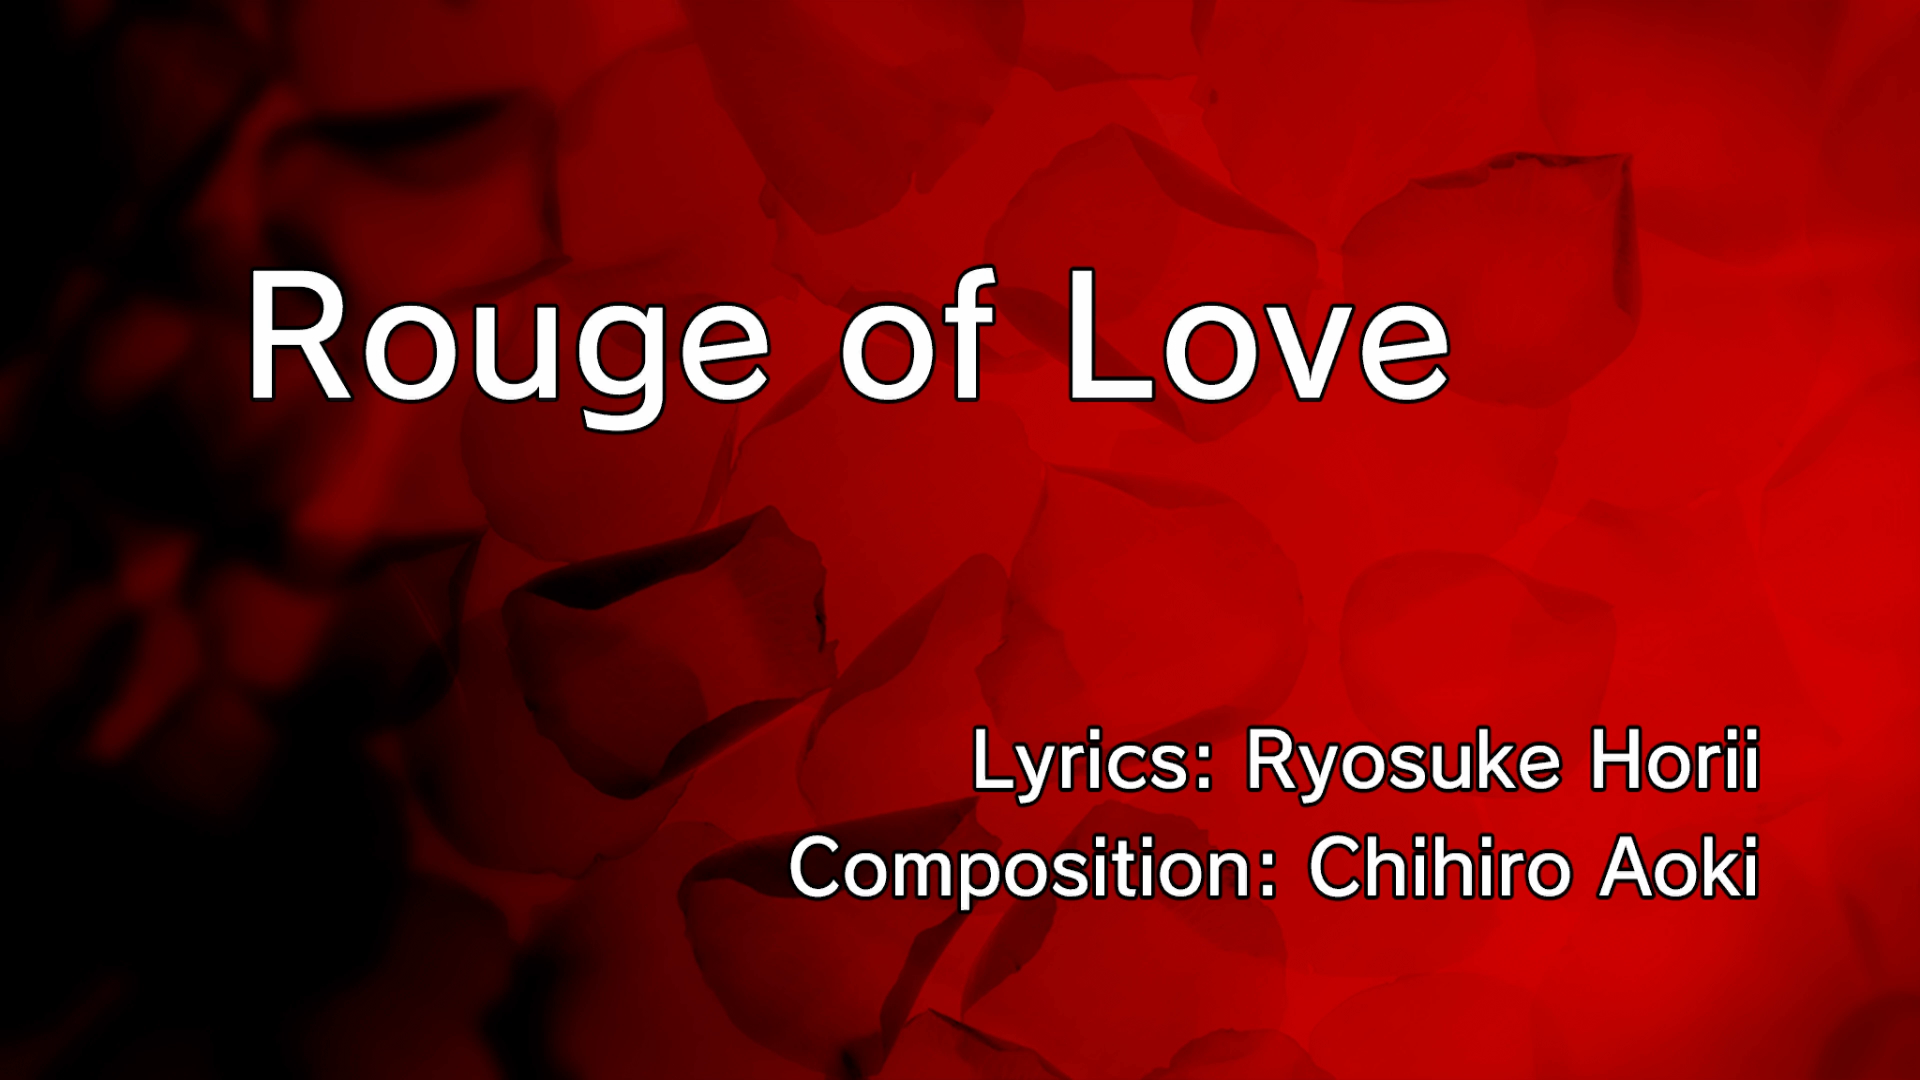 Yakuza Baka Mitai Lyrics in Romaji and English!